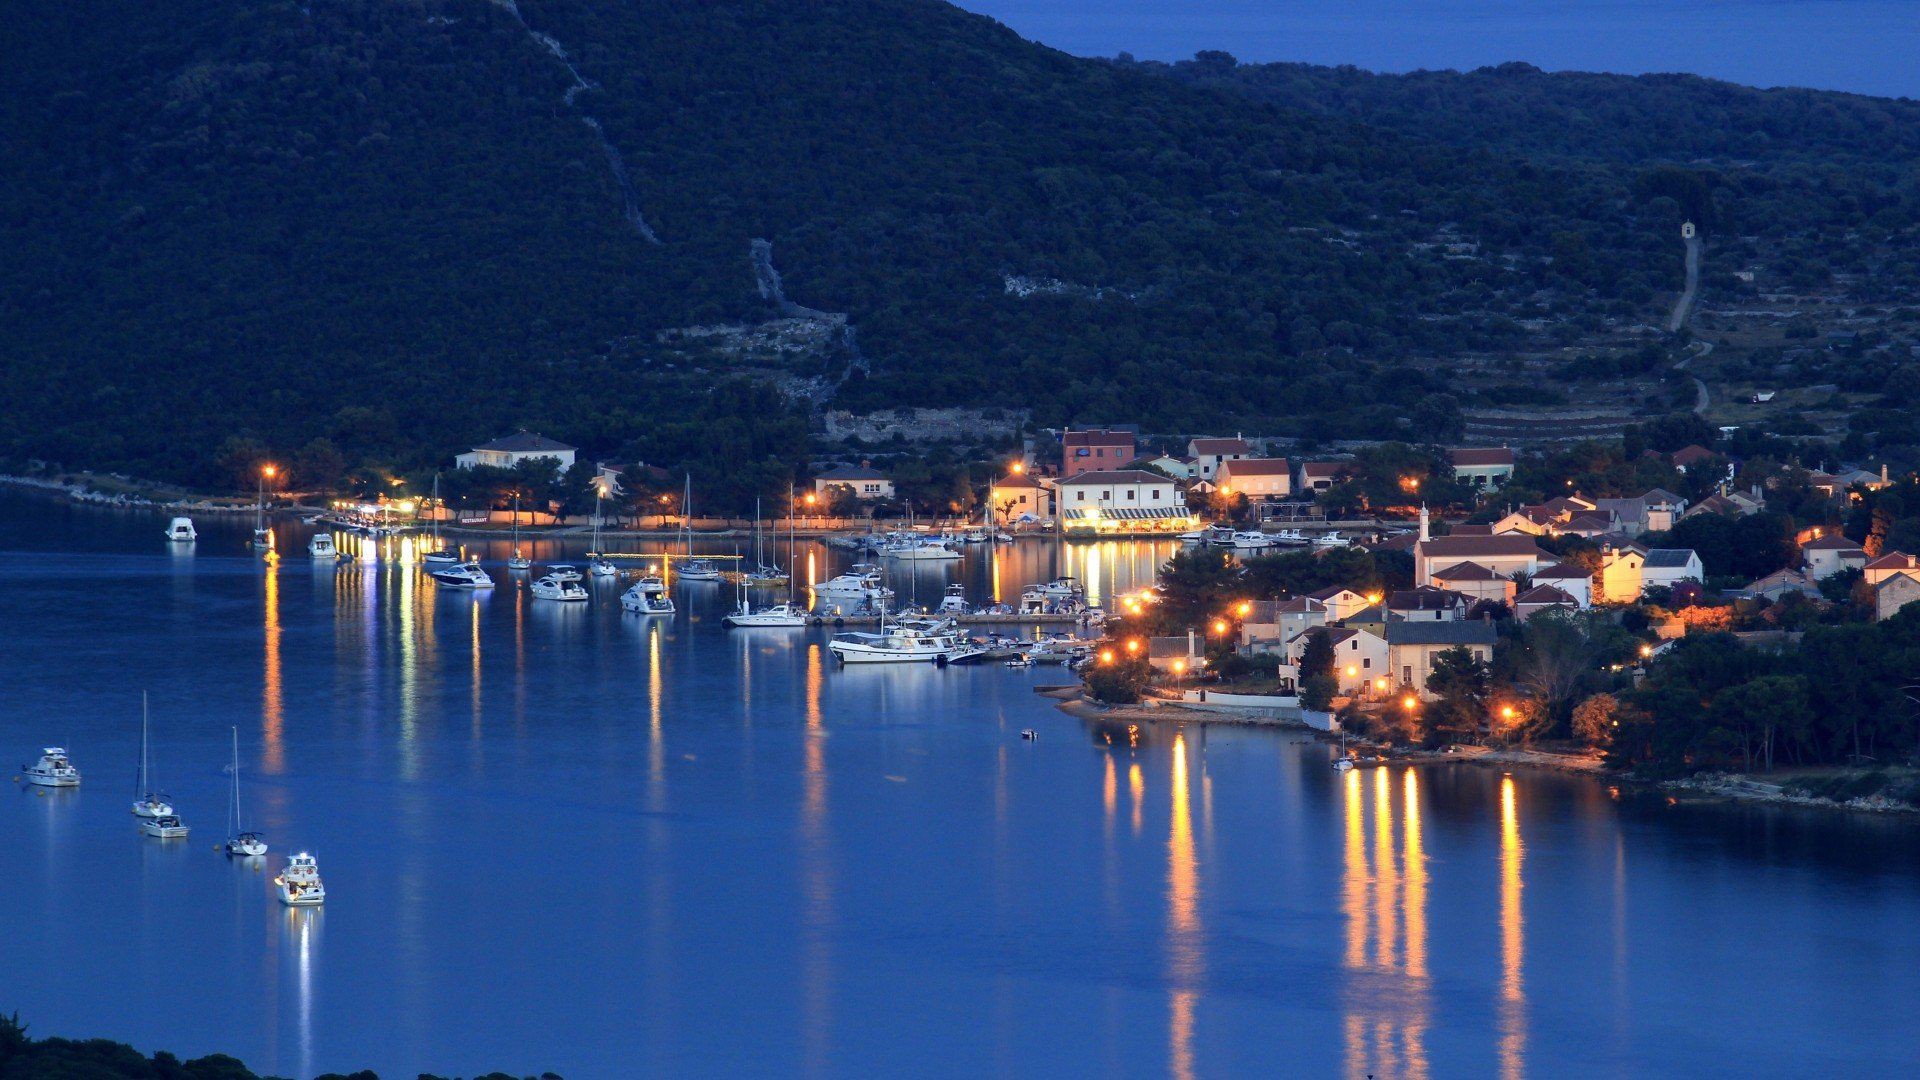 Ilovik - Adriatic Sea | Croatia Cruise Croatia Cruise